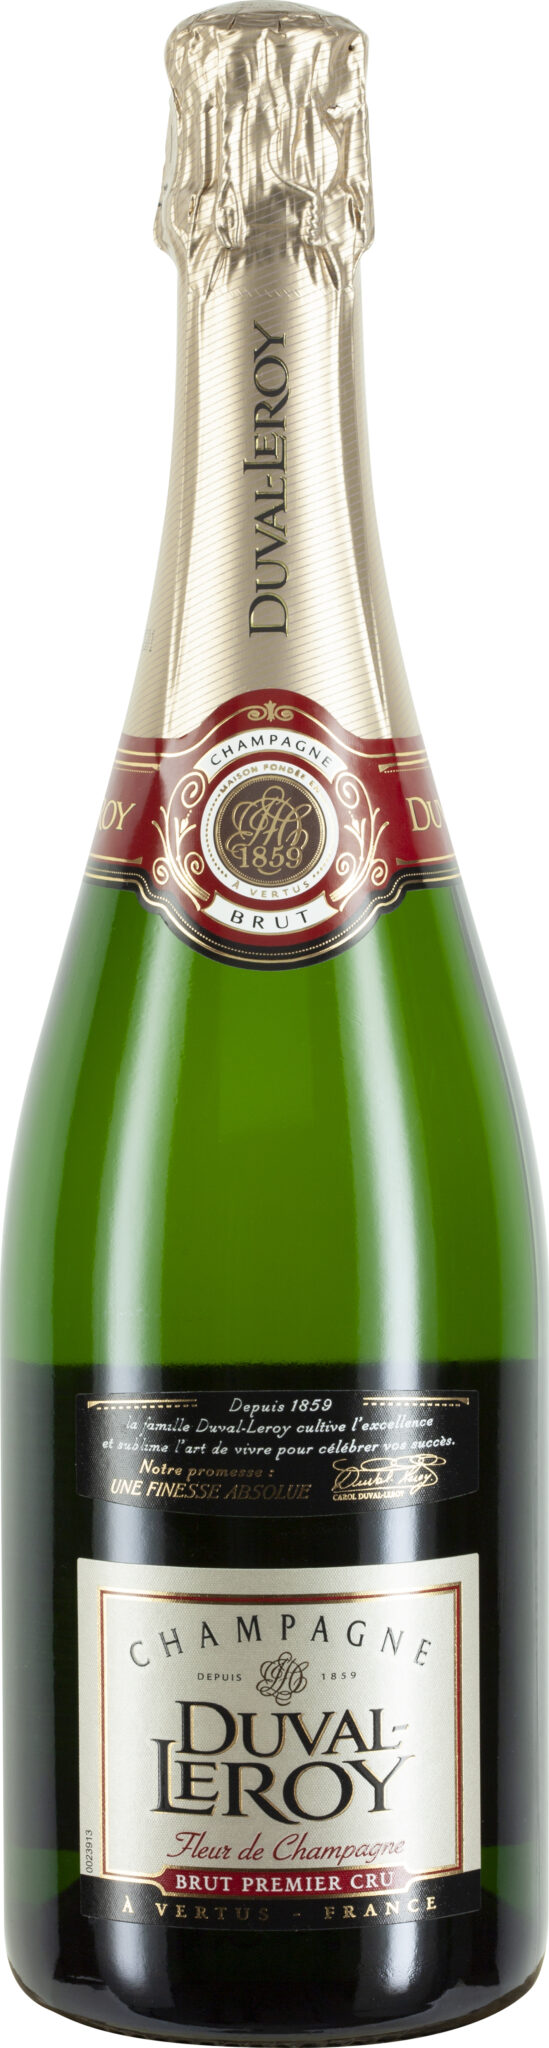 Duval-Leroy Fleur de Champagne, Champagne Brut Premier Cru